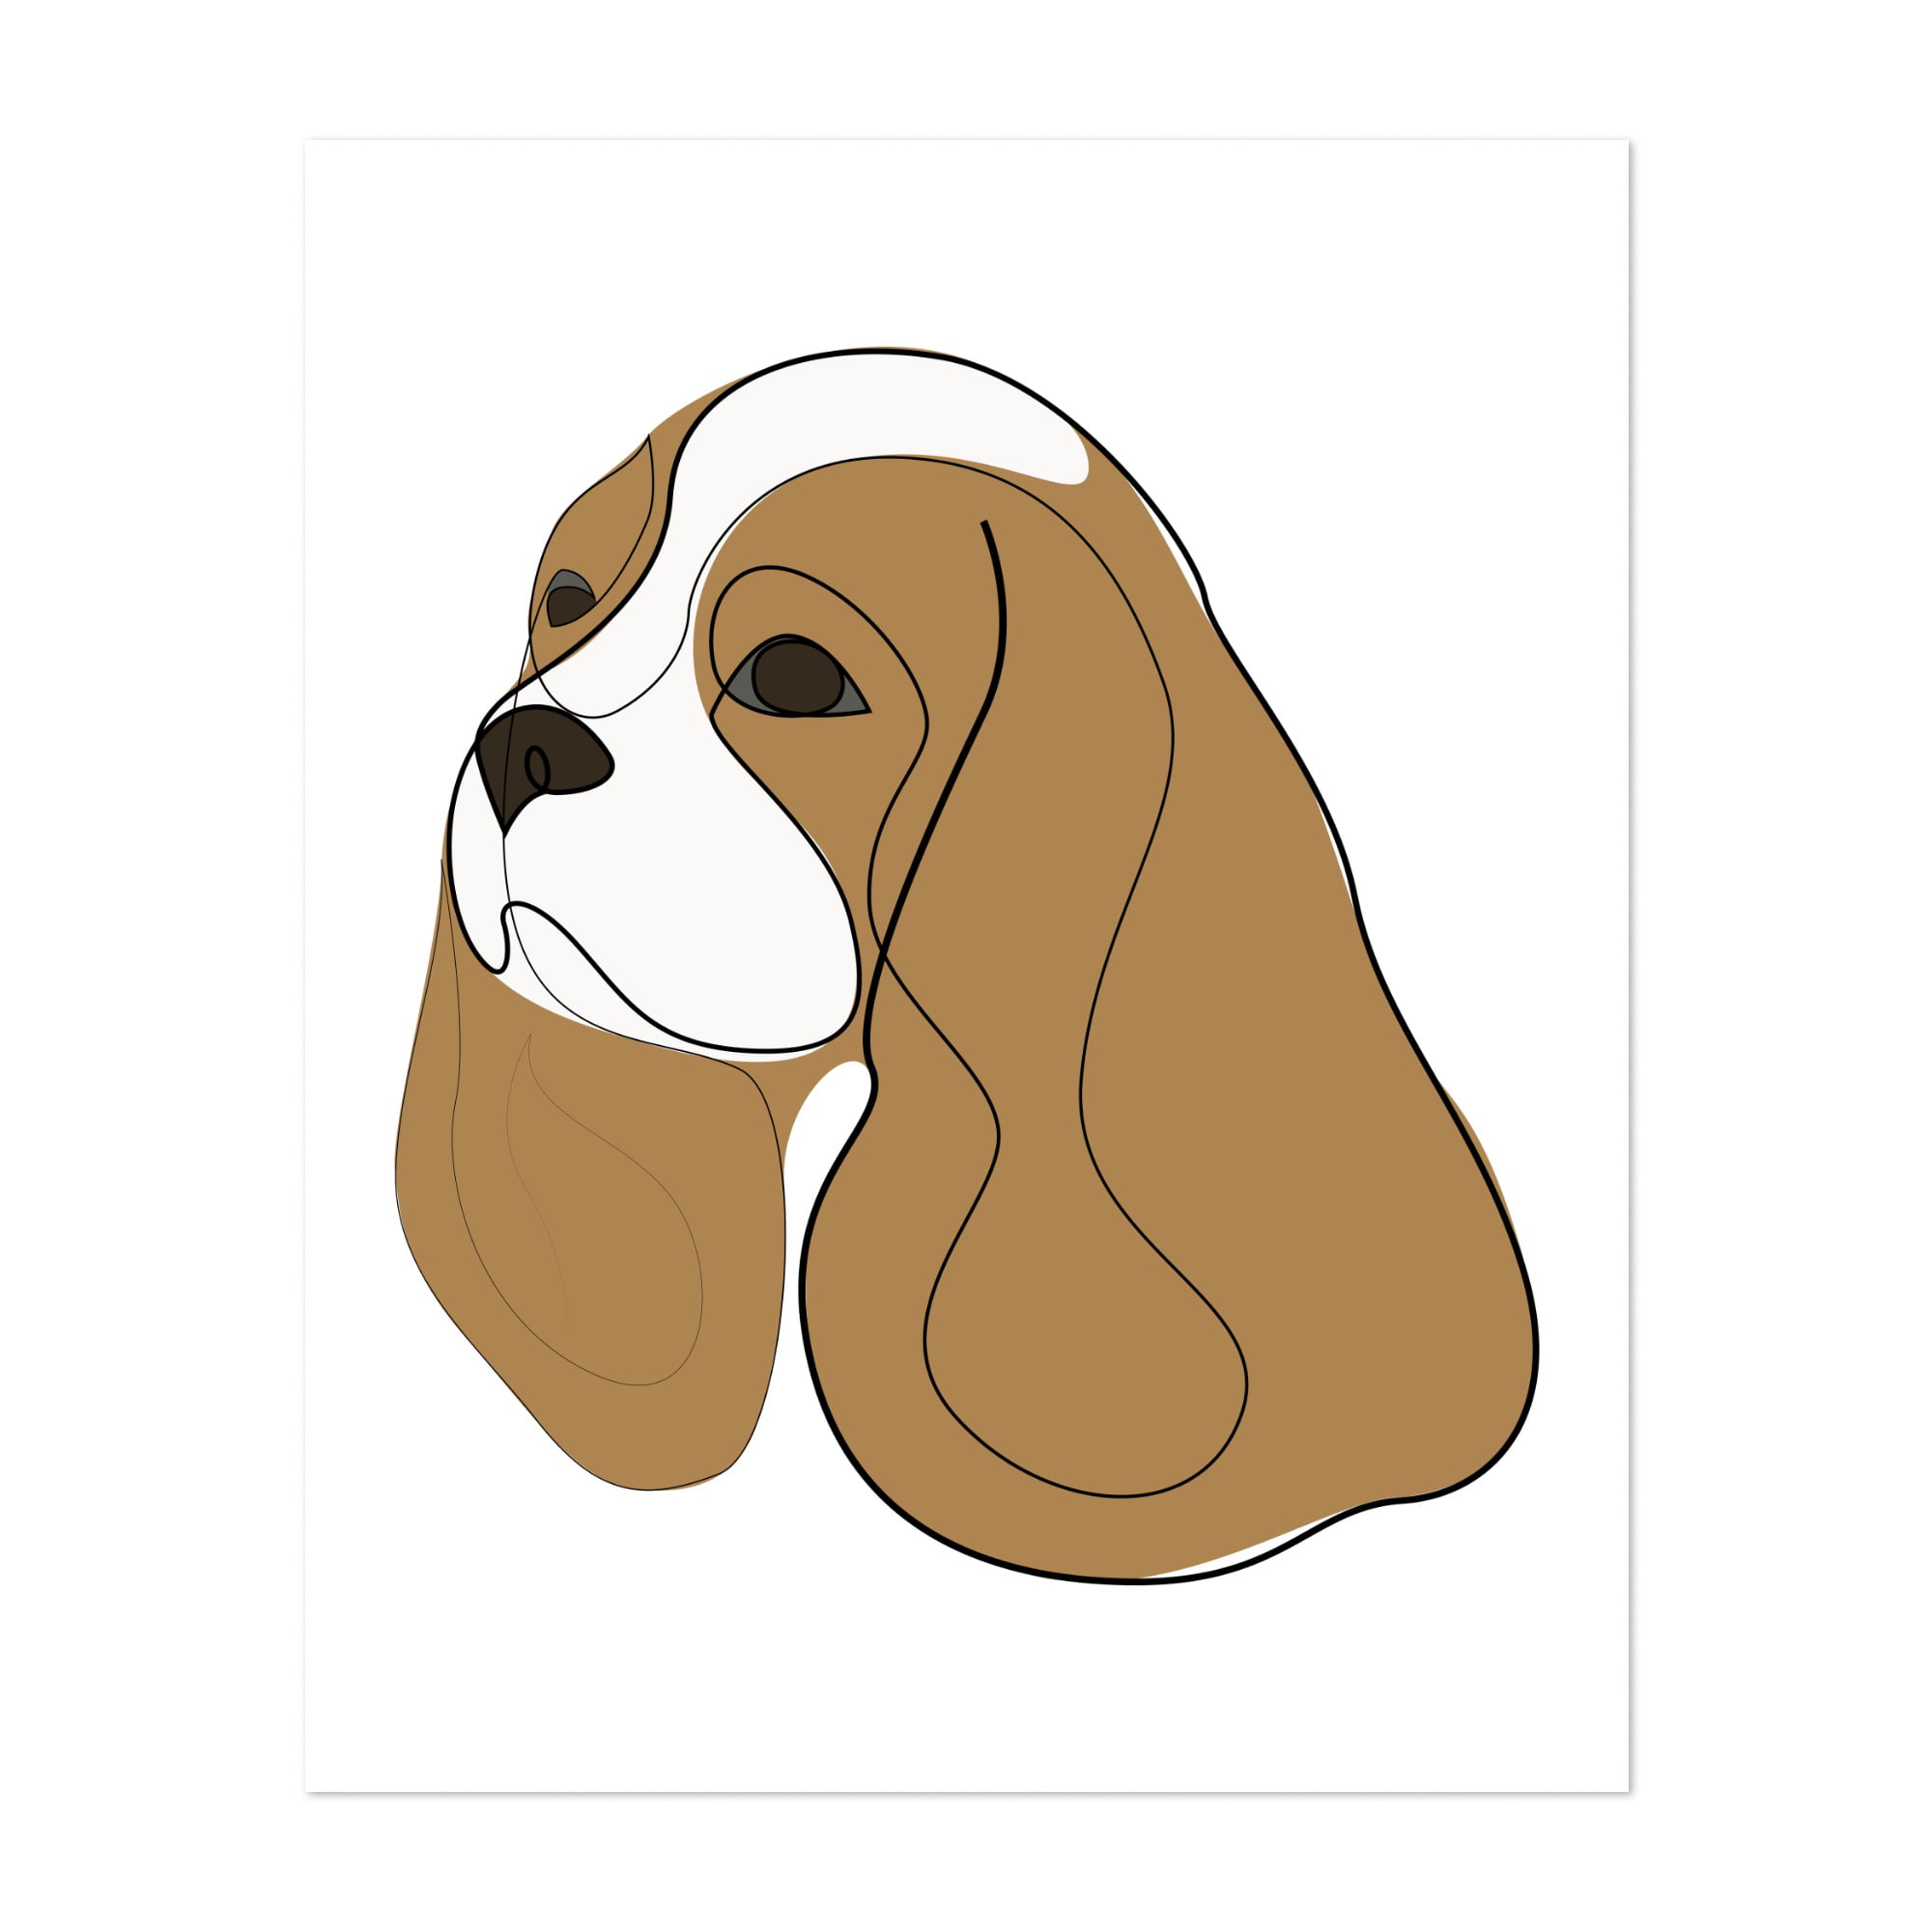 CELL PHONE art cavalier king charles spaniel dog pRINT poster gift 8x10 